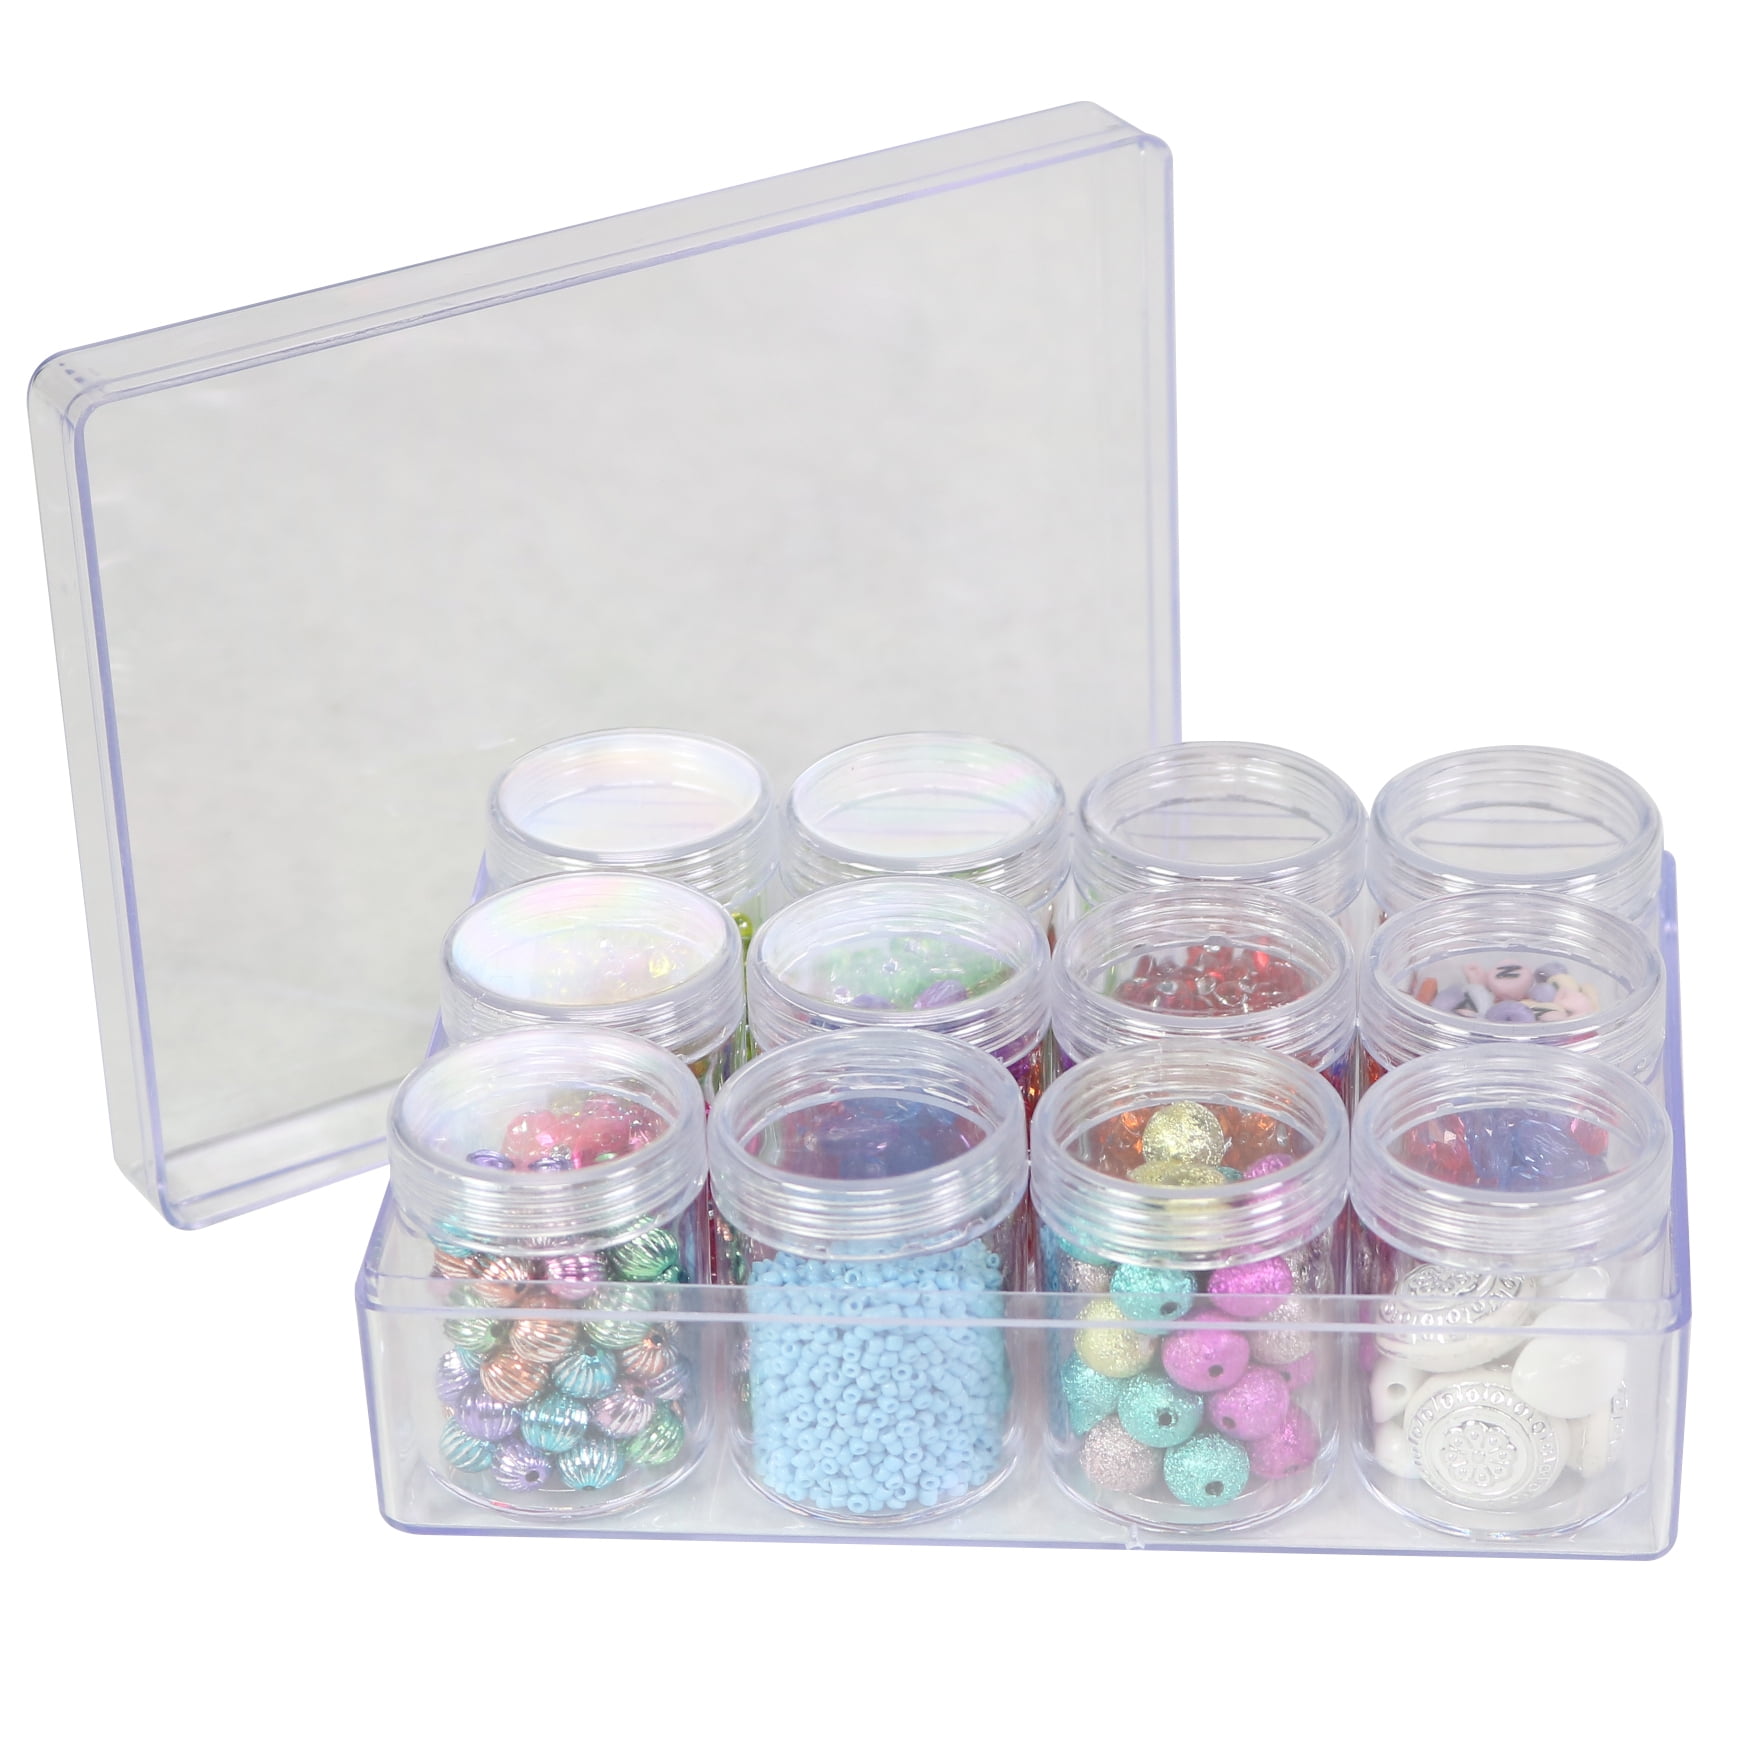 Everything Mary Large Plastic Bead Storage Box with 24 Jars